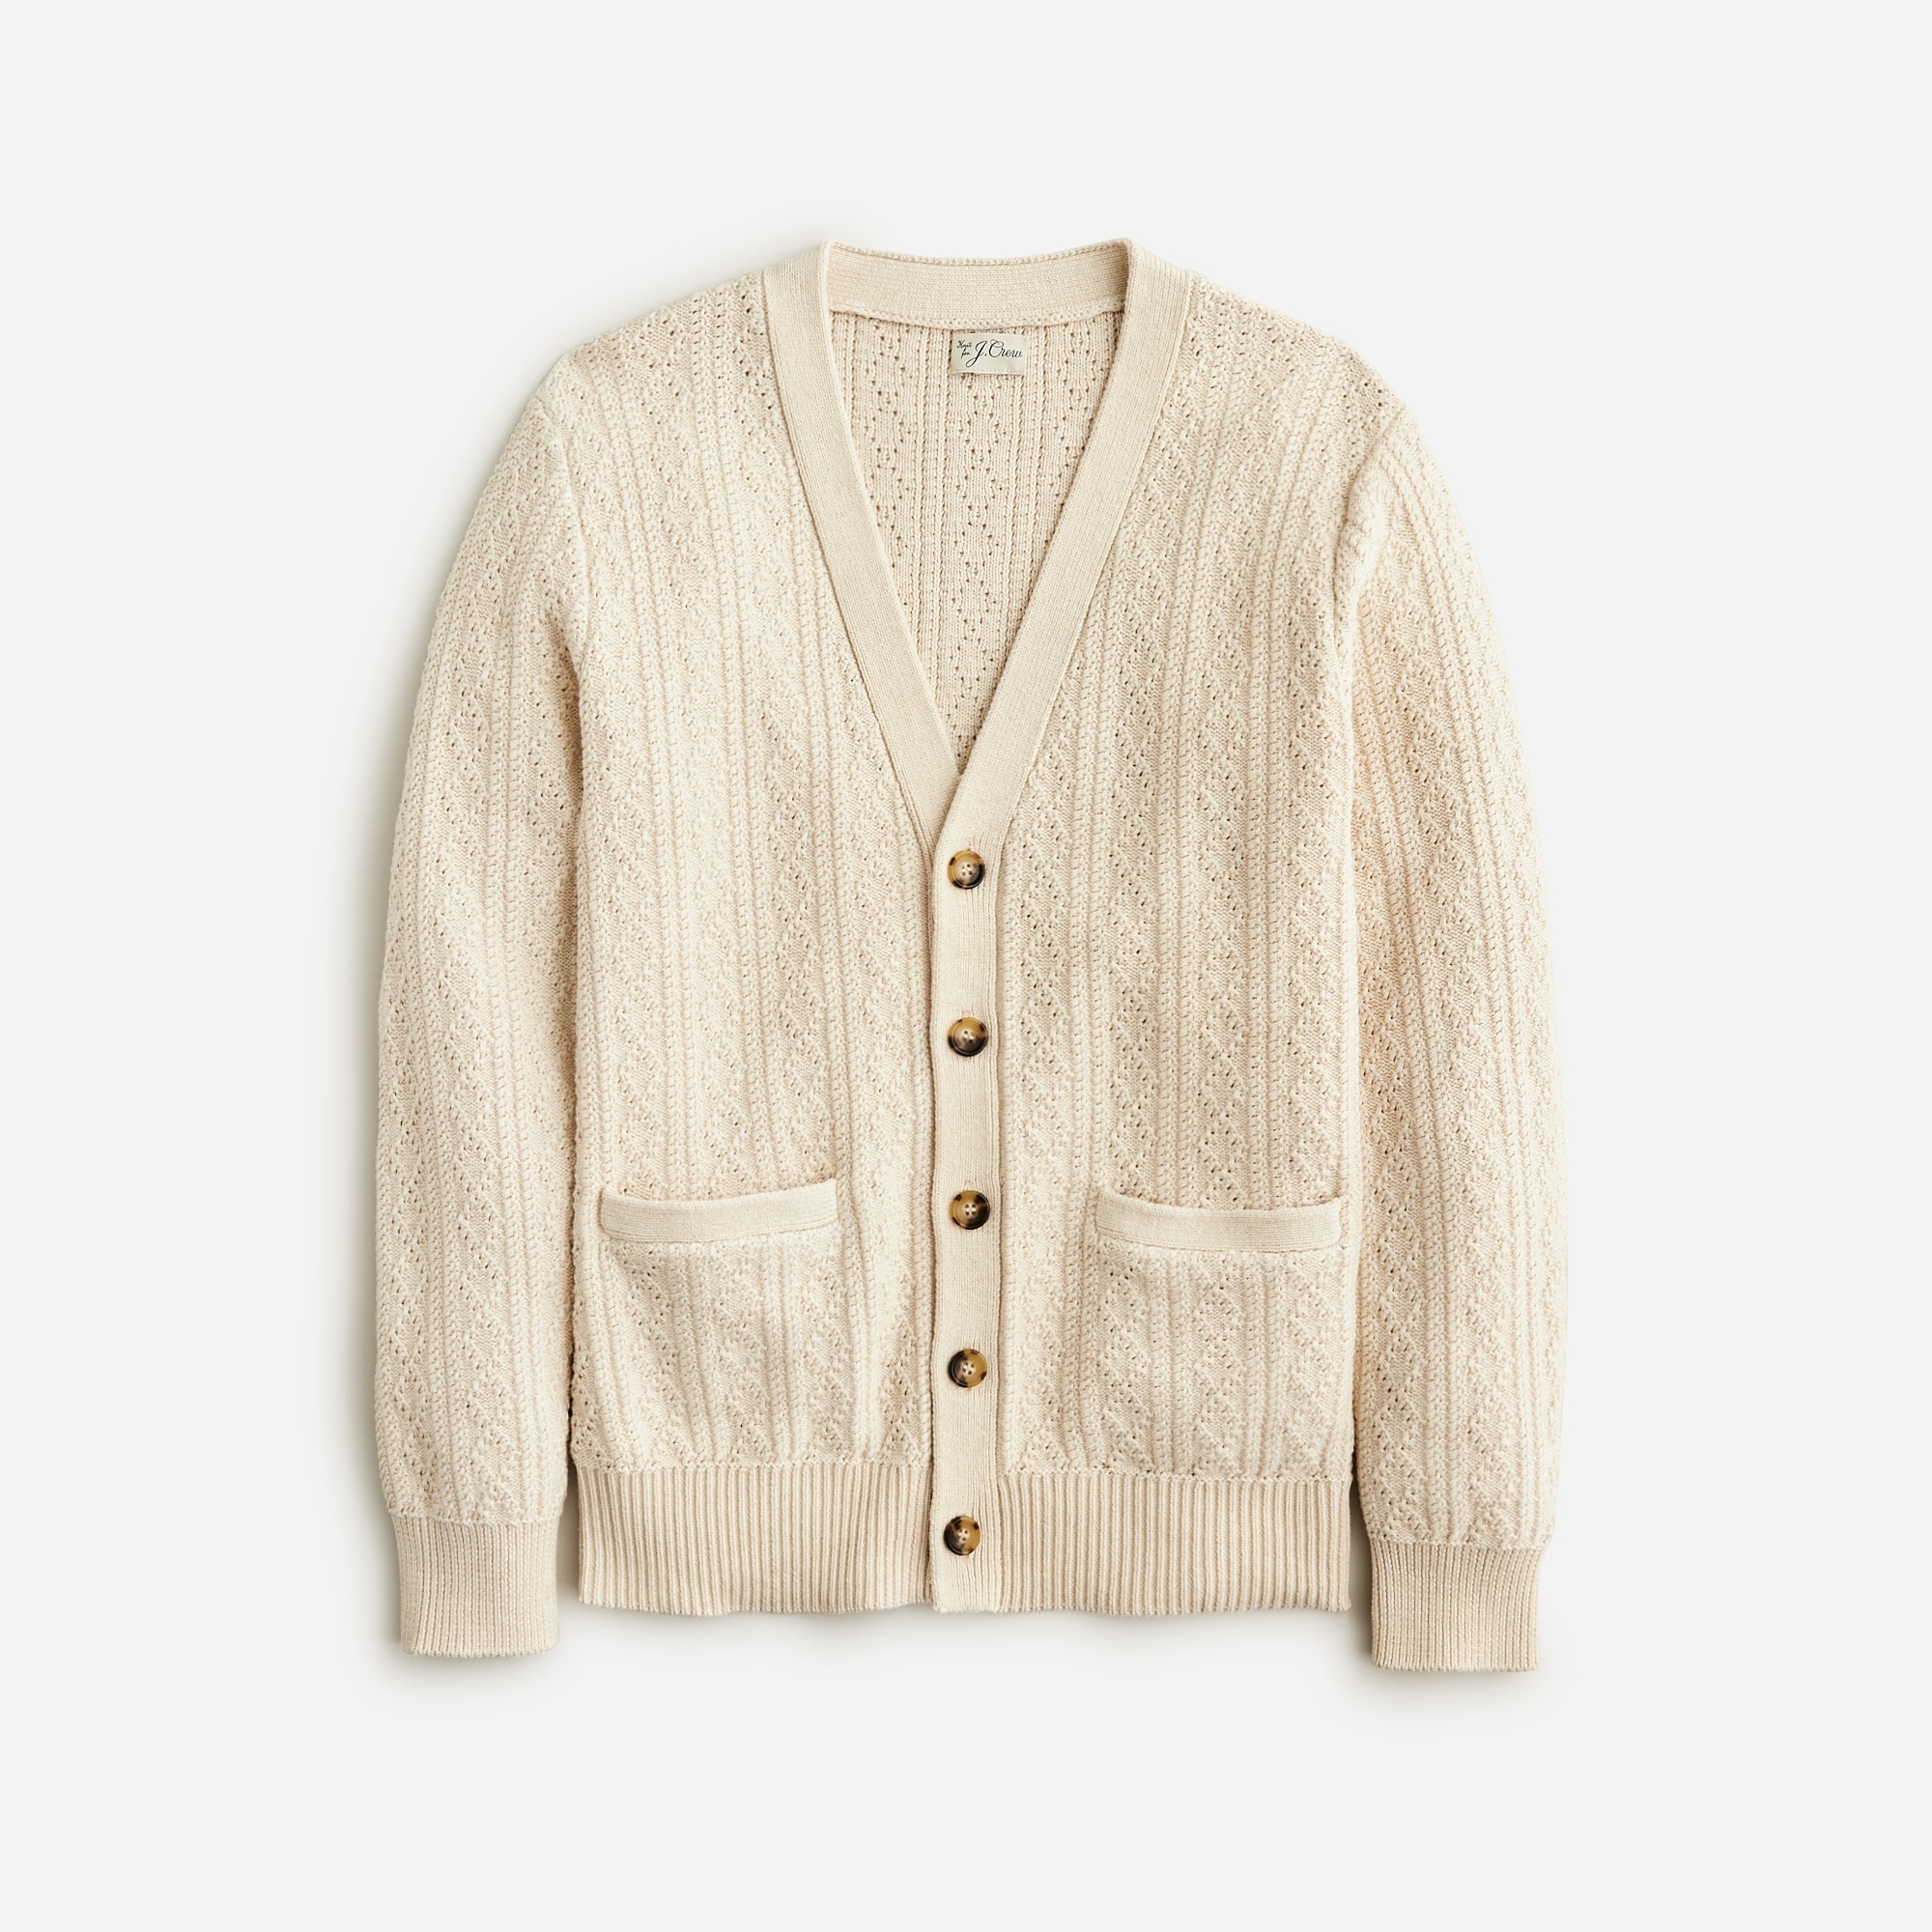  Heritage cotton pointelle-stitch cardigan sweater